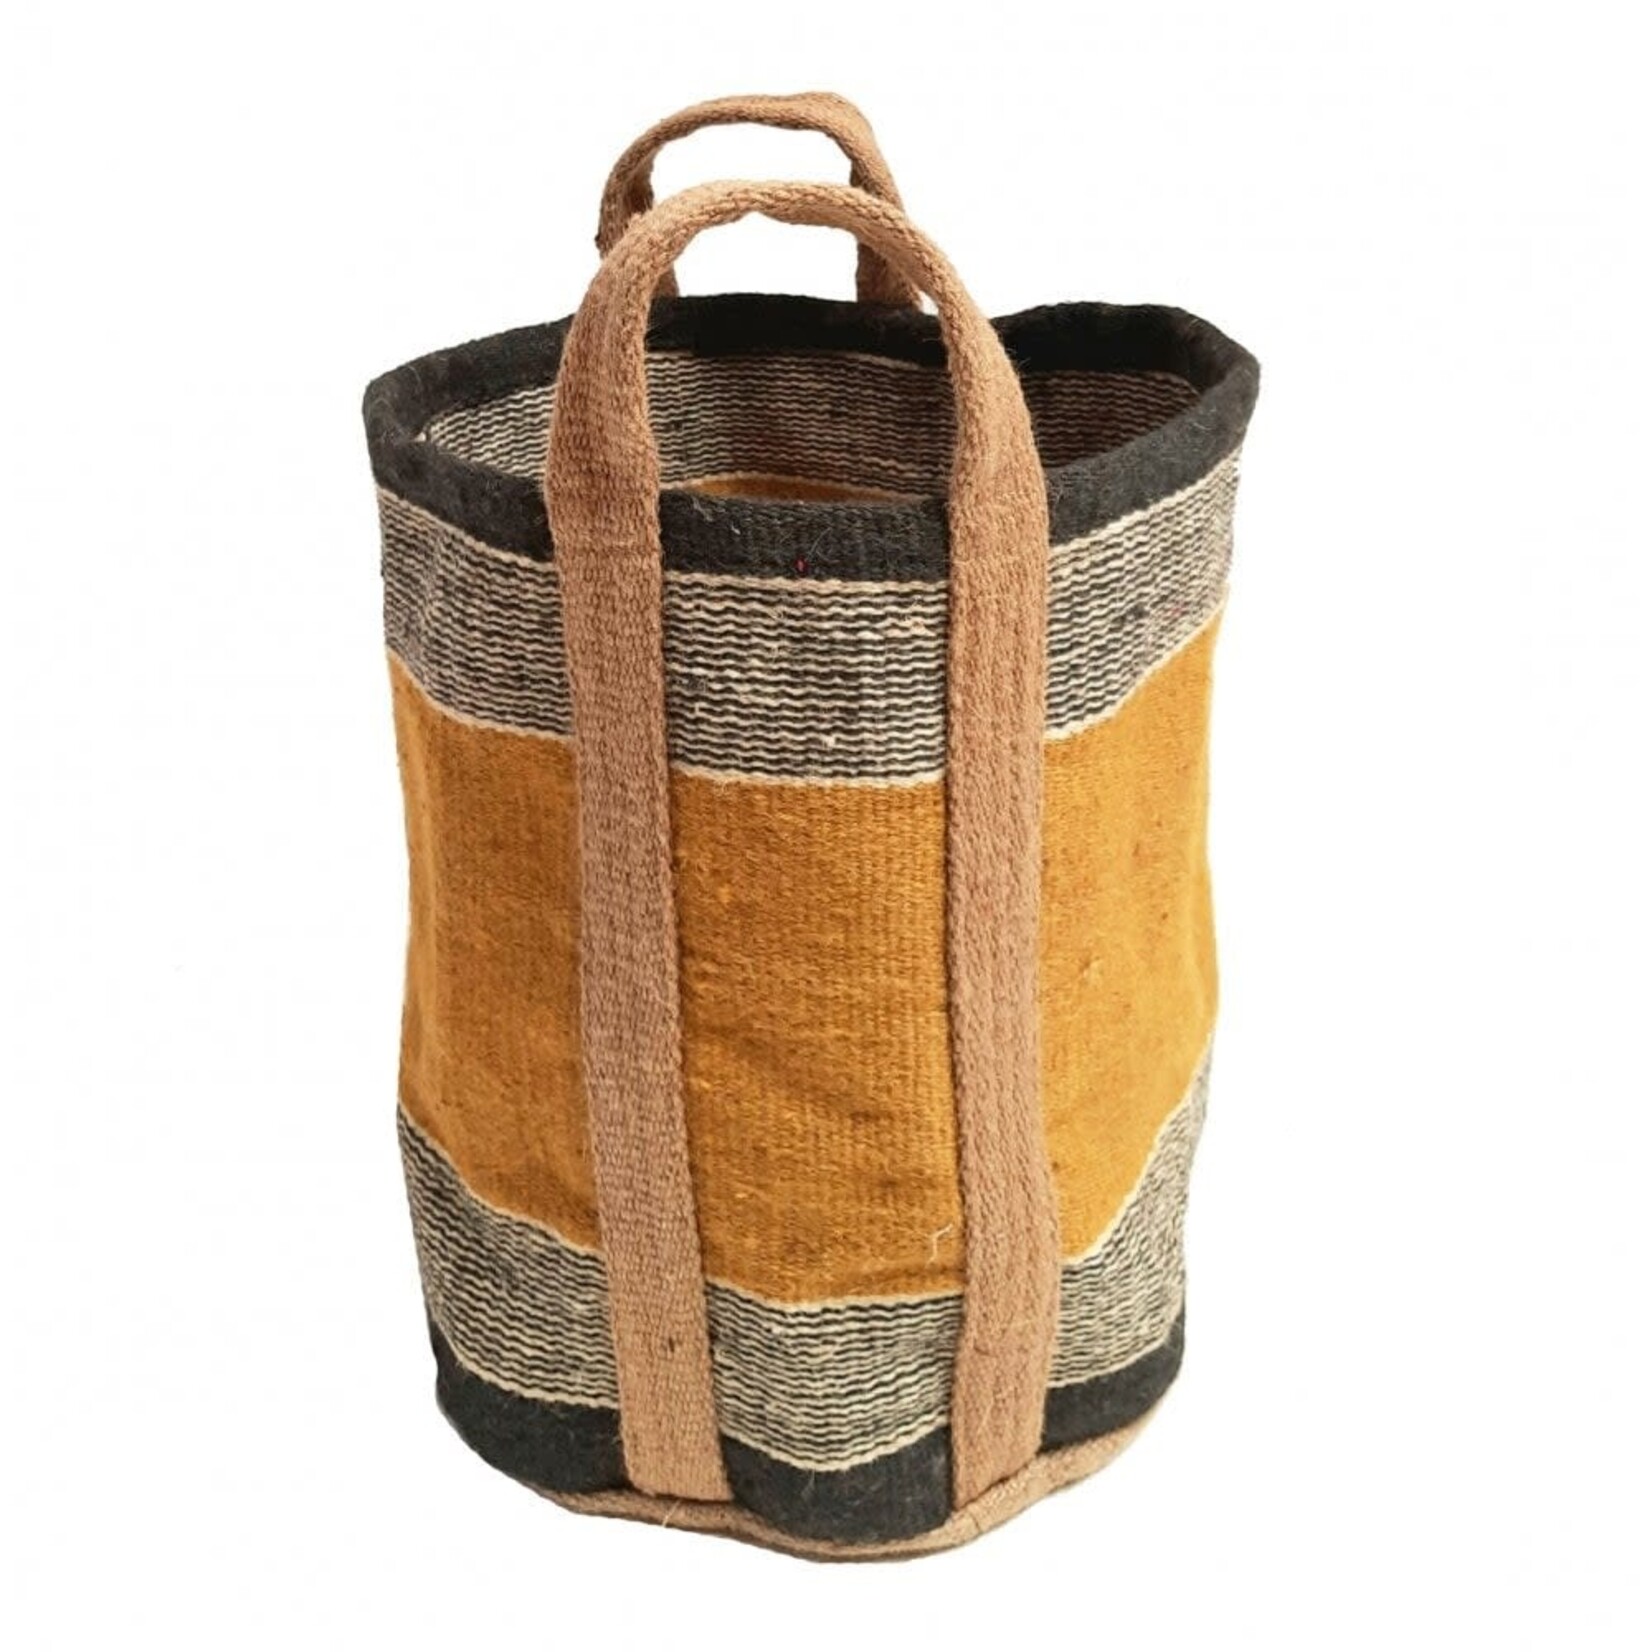 Fiona Walker Fiona Walker Jute Storage Bag/Basket - Mustard Black and White Stripe 60x43cm